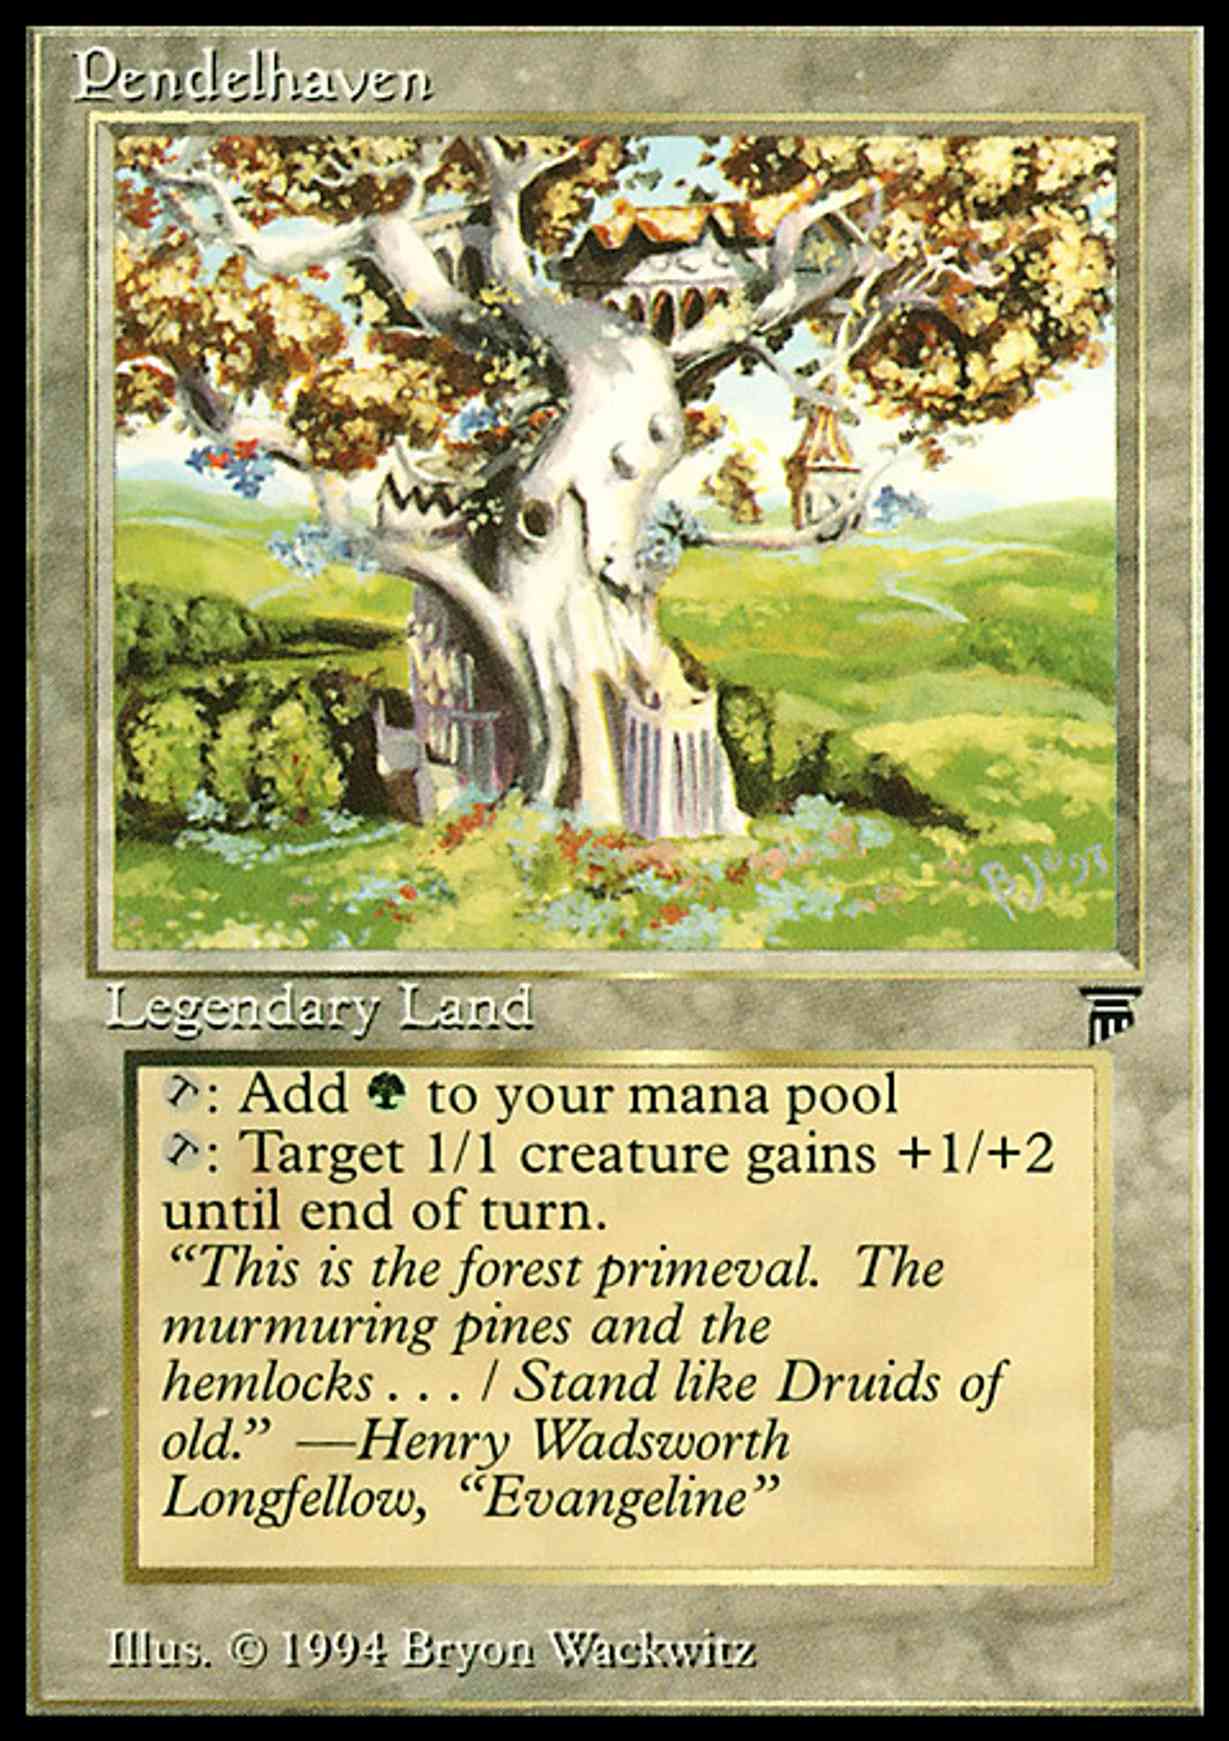 Pendelhaven magic card front